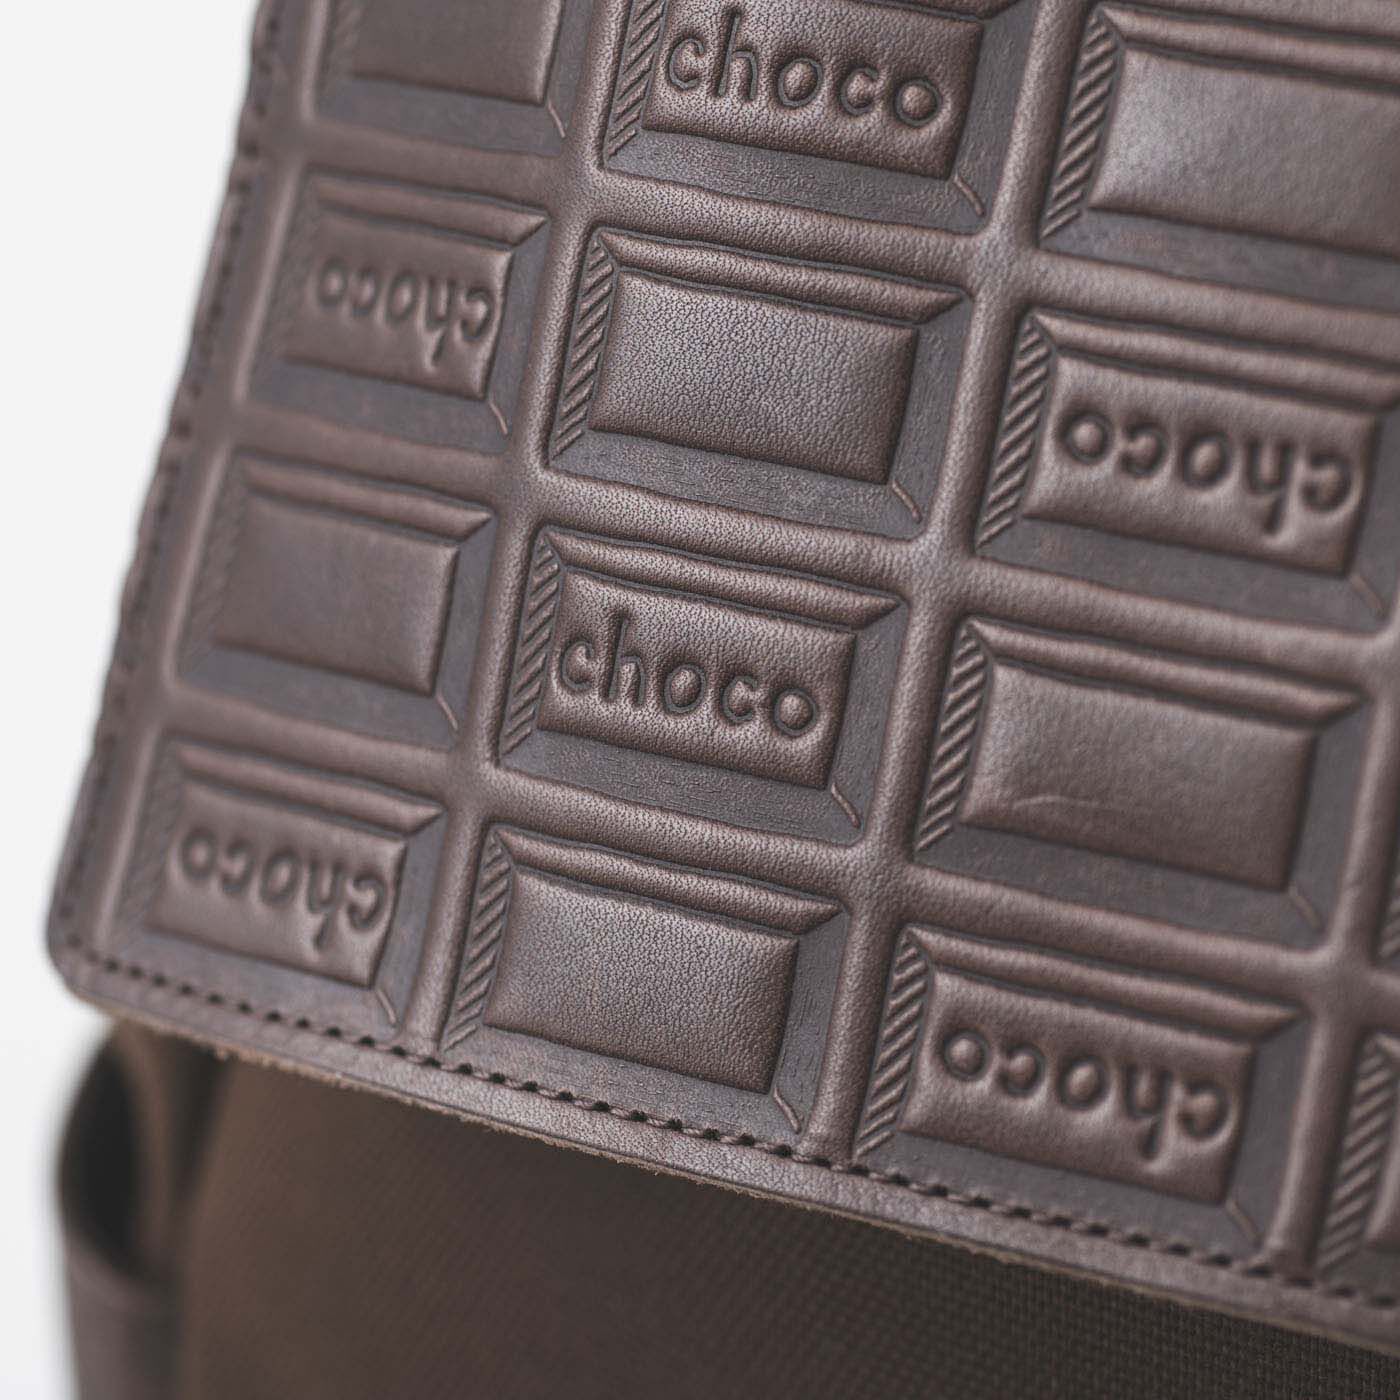 ＆Stories|チョコレートバイヤーが作った 職人本革遣いのチョコリュック〈ダークブラウン〉